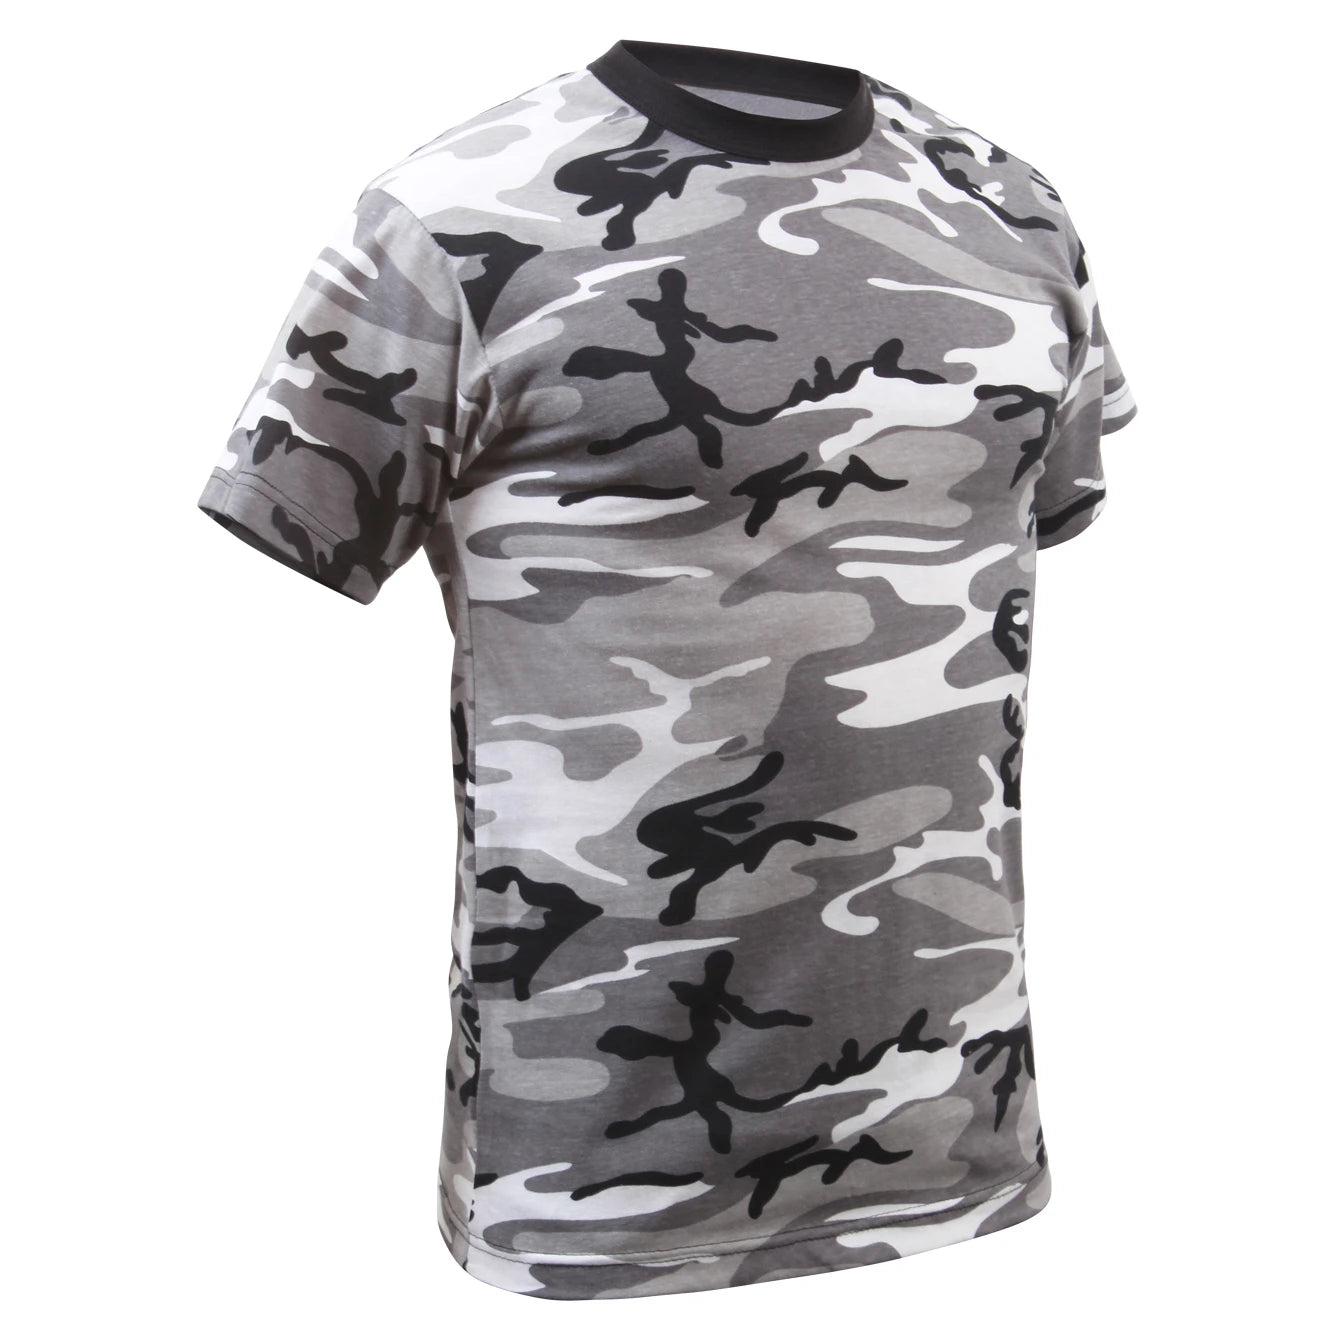 Urban Camo - Short Sleeve T-Shirt